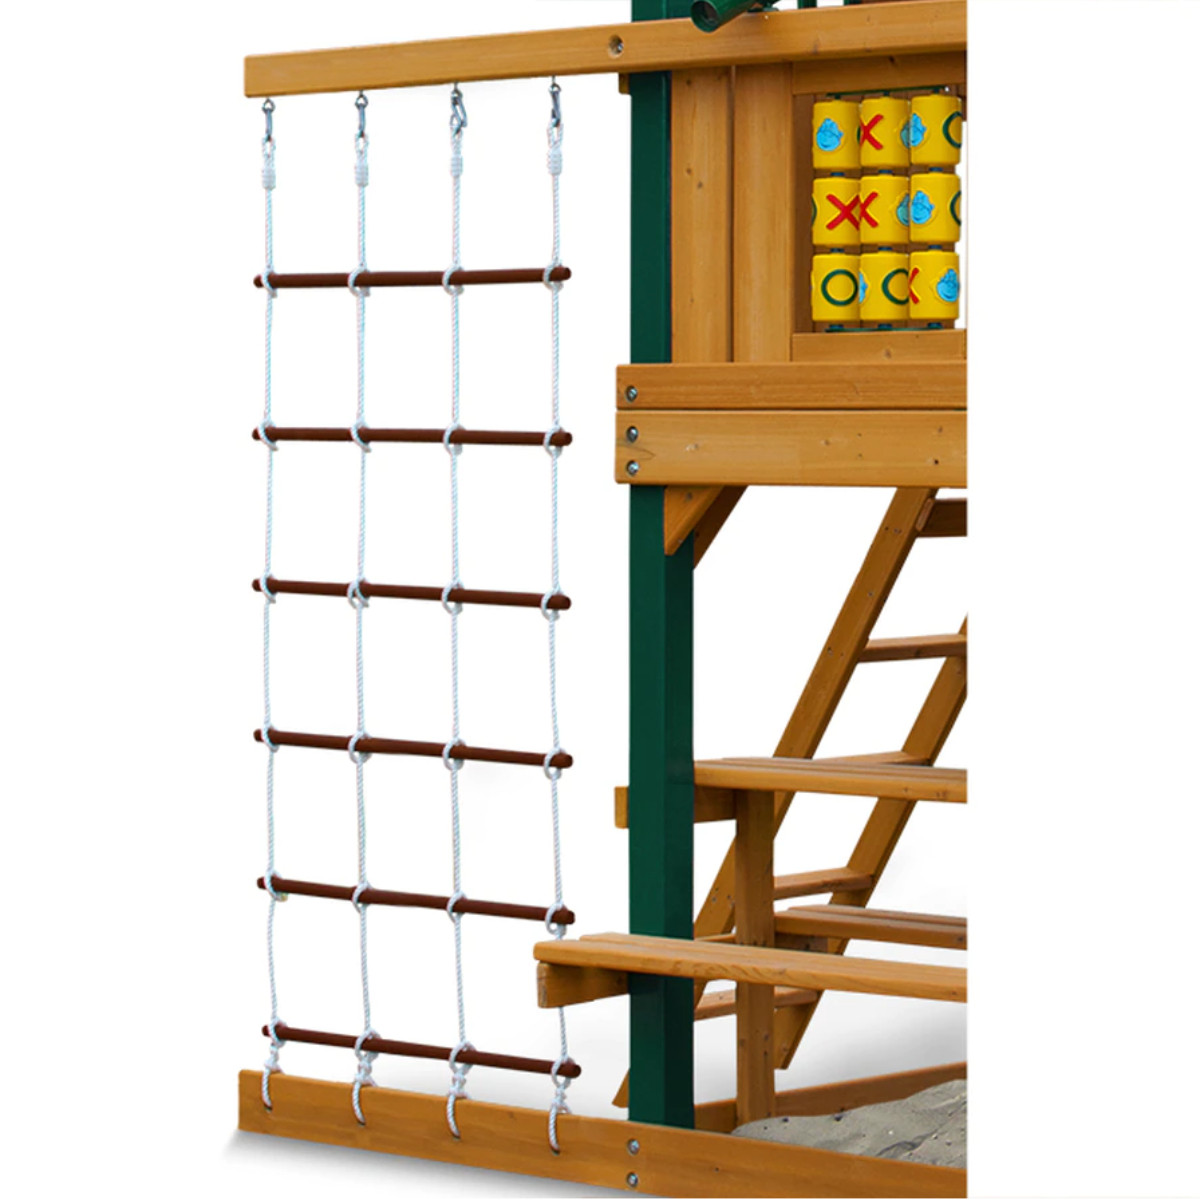 36" Wide Backyard Residential Rope Ladder (JS-LADDER)